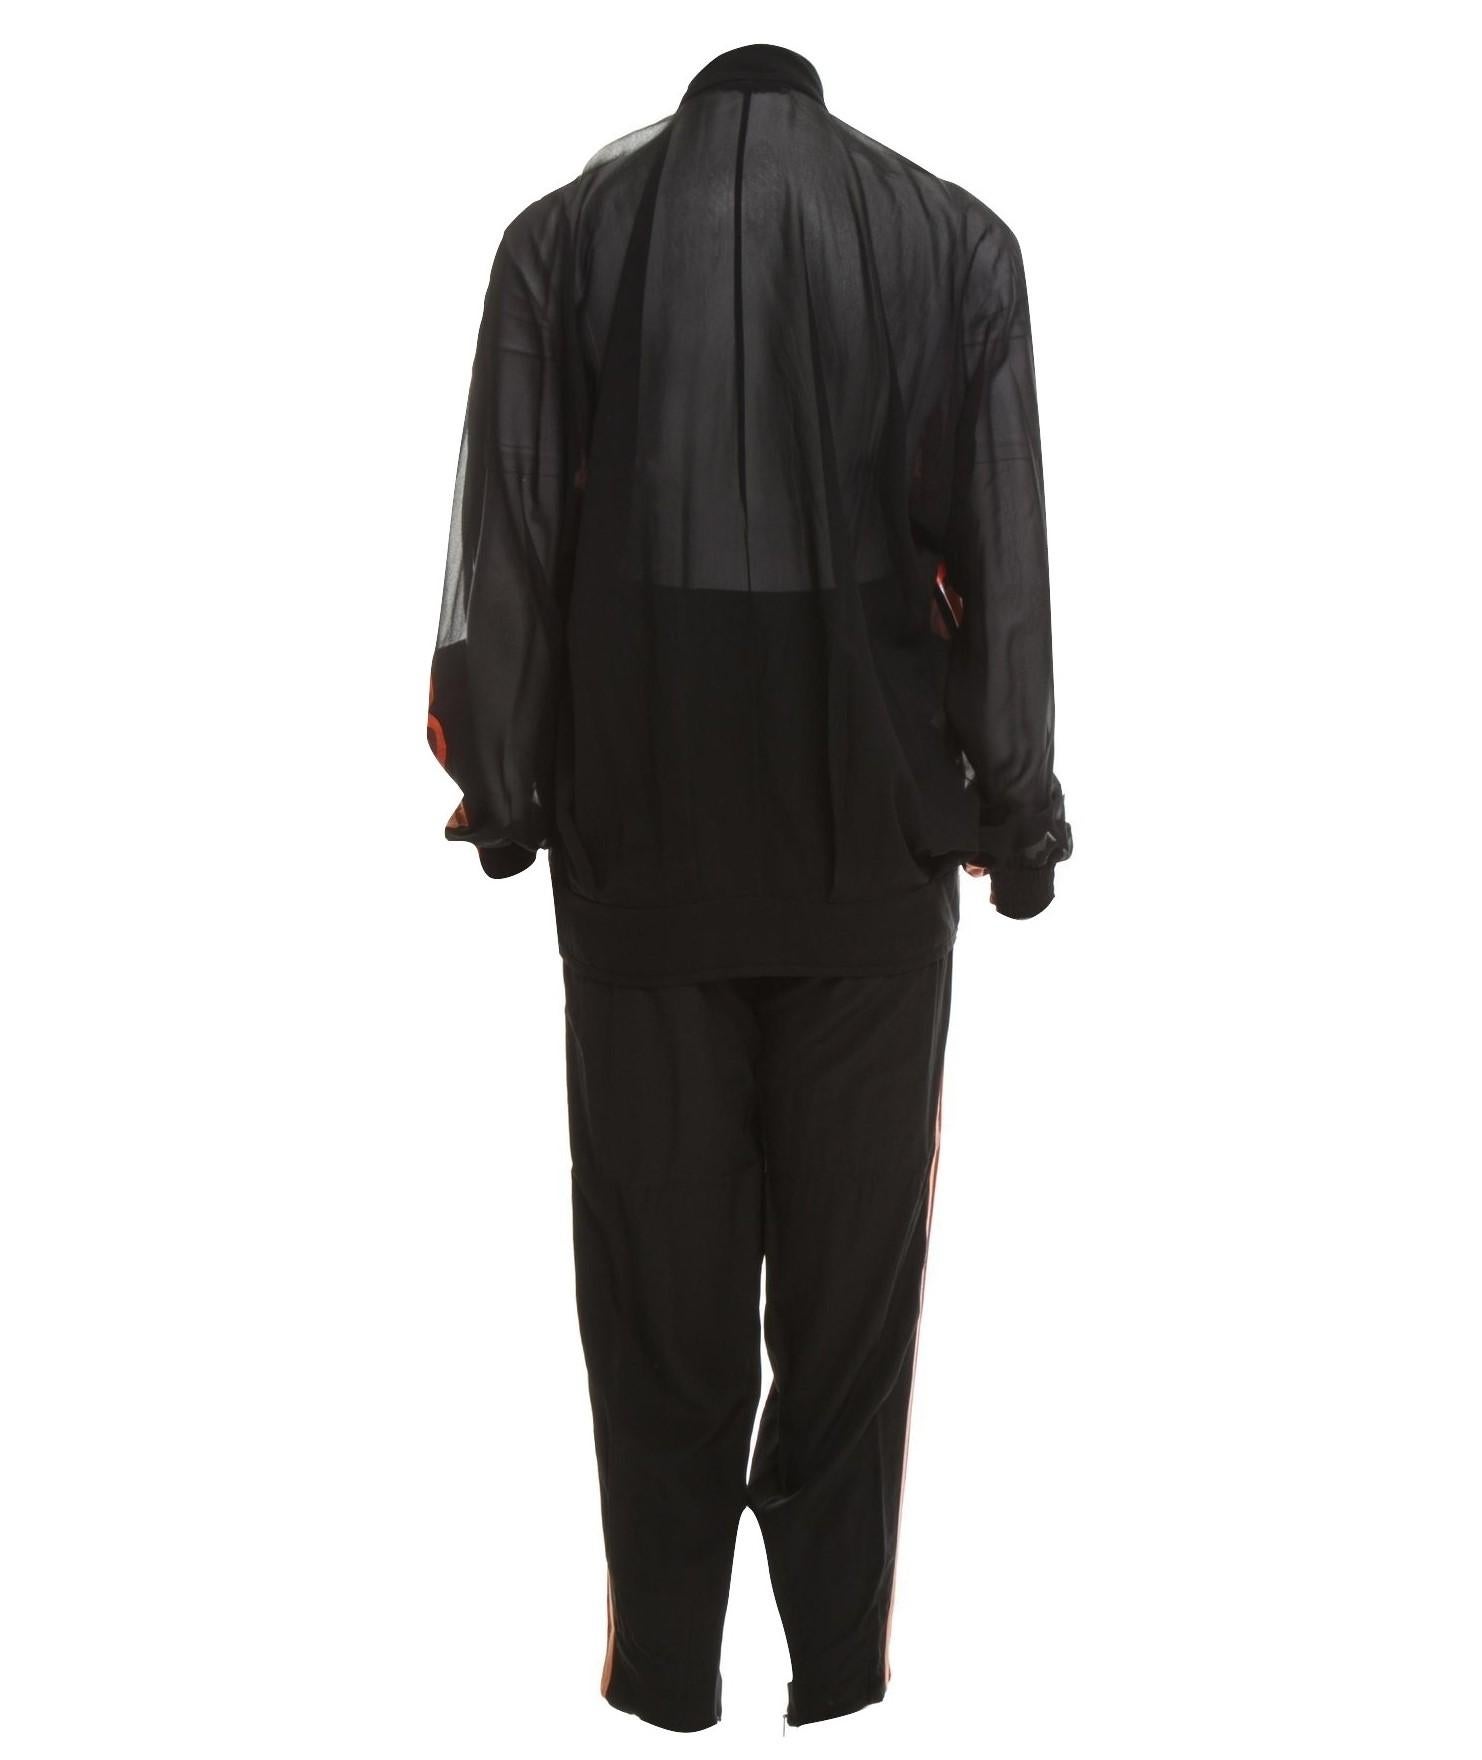 New Rare Gucci Runway Ad Silk Pantsuit Jacket & Pants S/S 2014 Sz 44/38  6